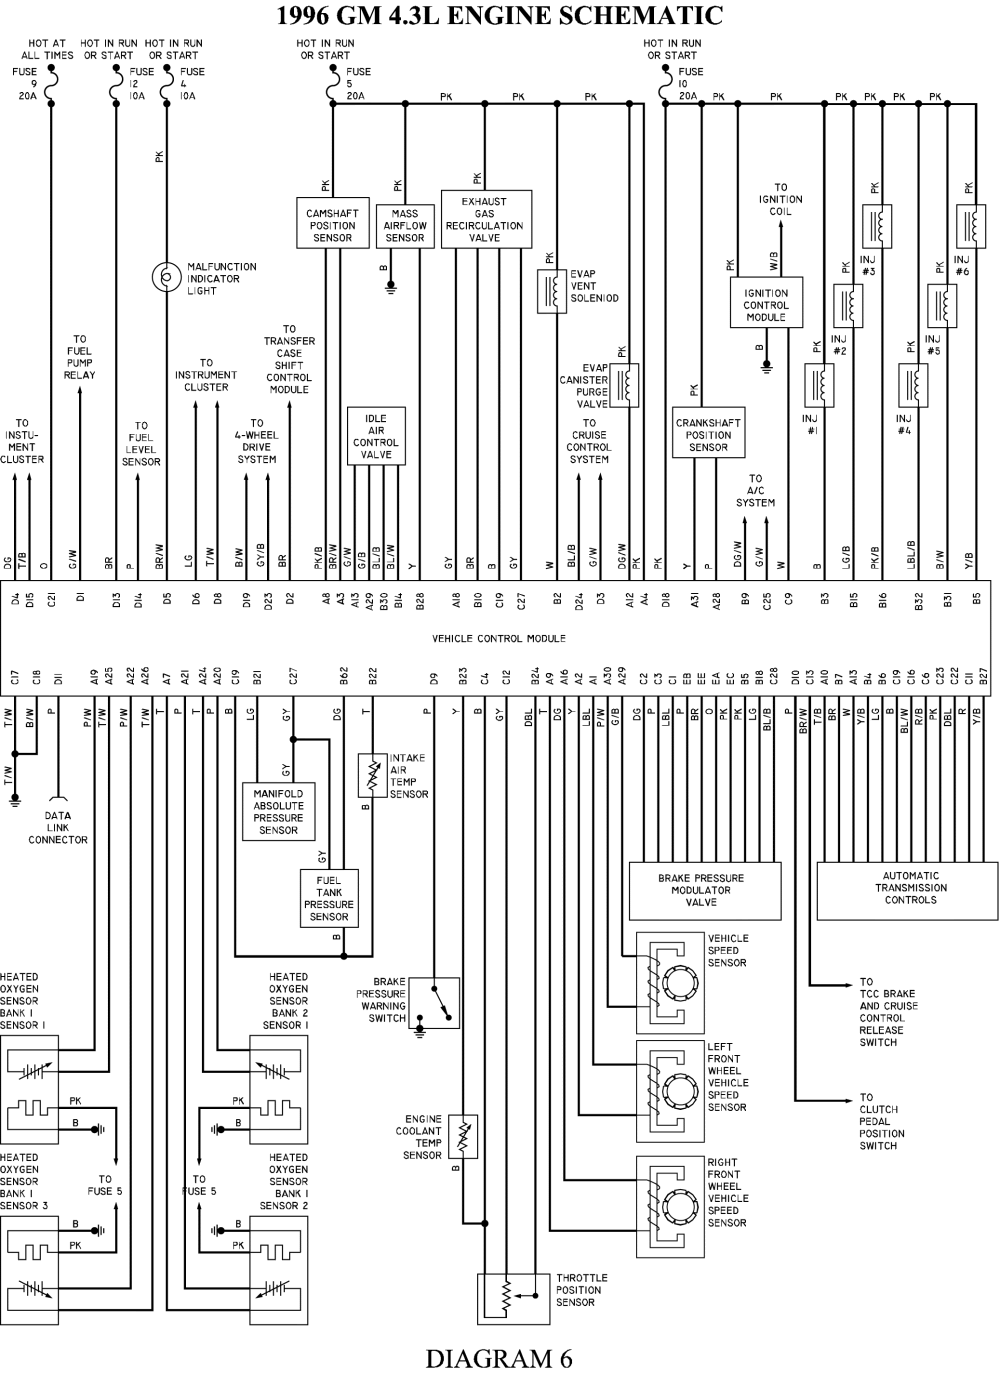 Wiring Diagram 2000 Chevy Blazer - Wiring Diagram